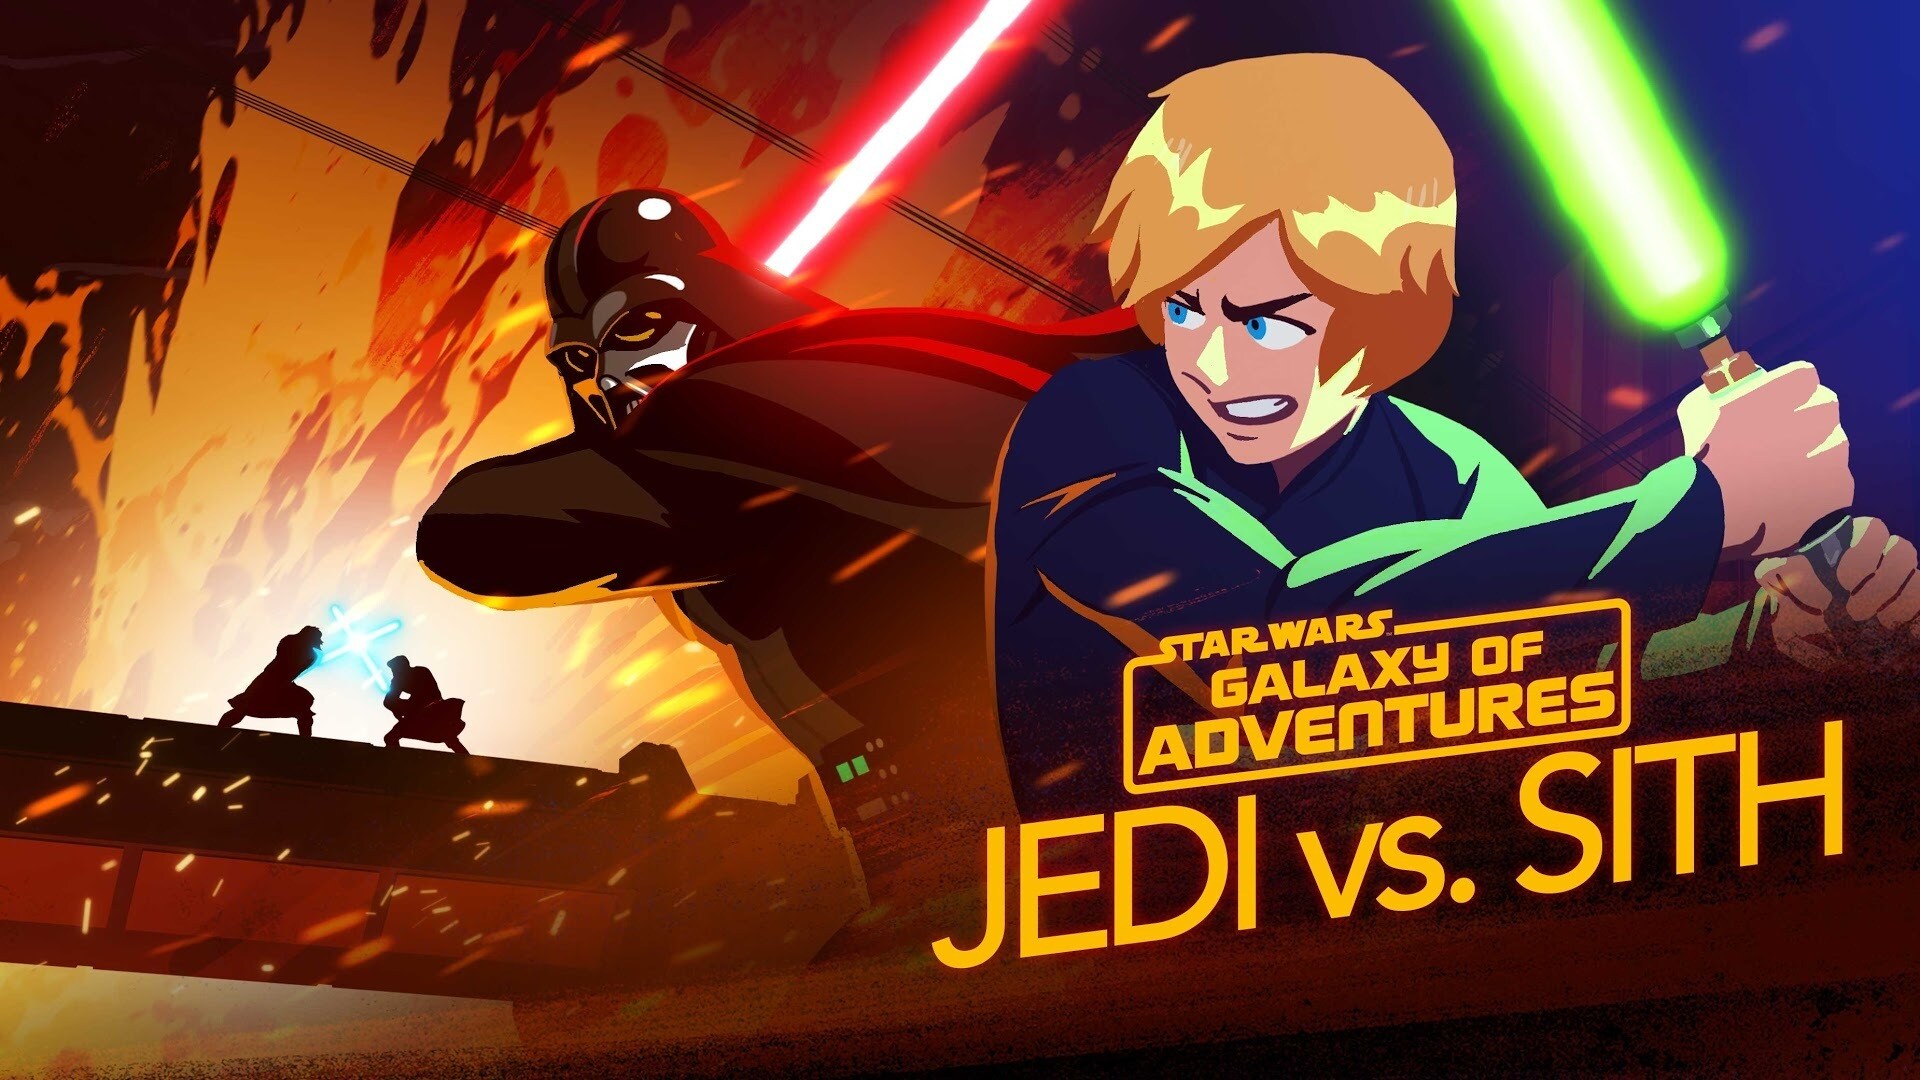 Jedi vs. Sith - The Skywalker Saga | Star Wars Galaxy of Adventures